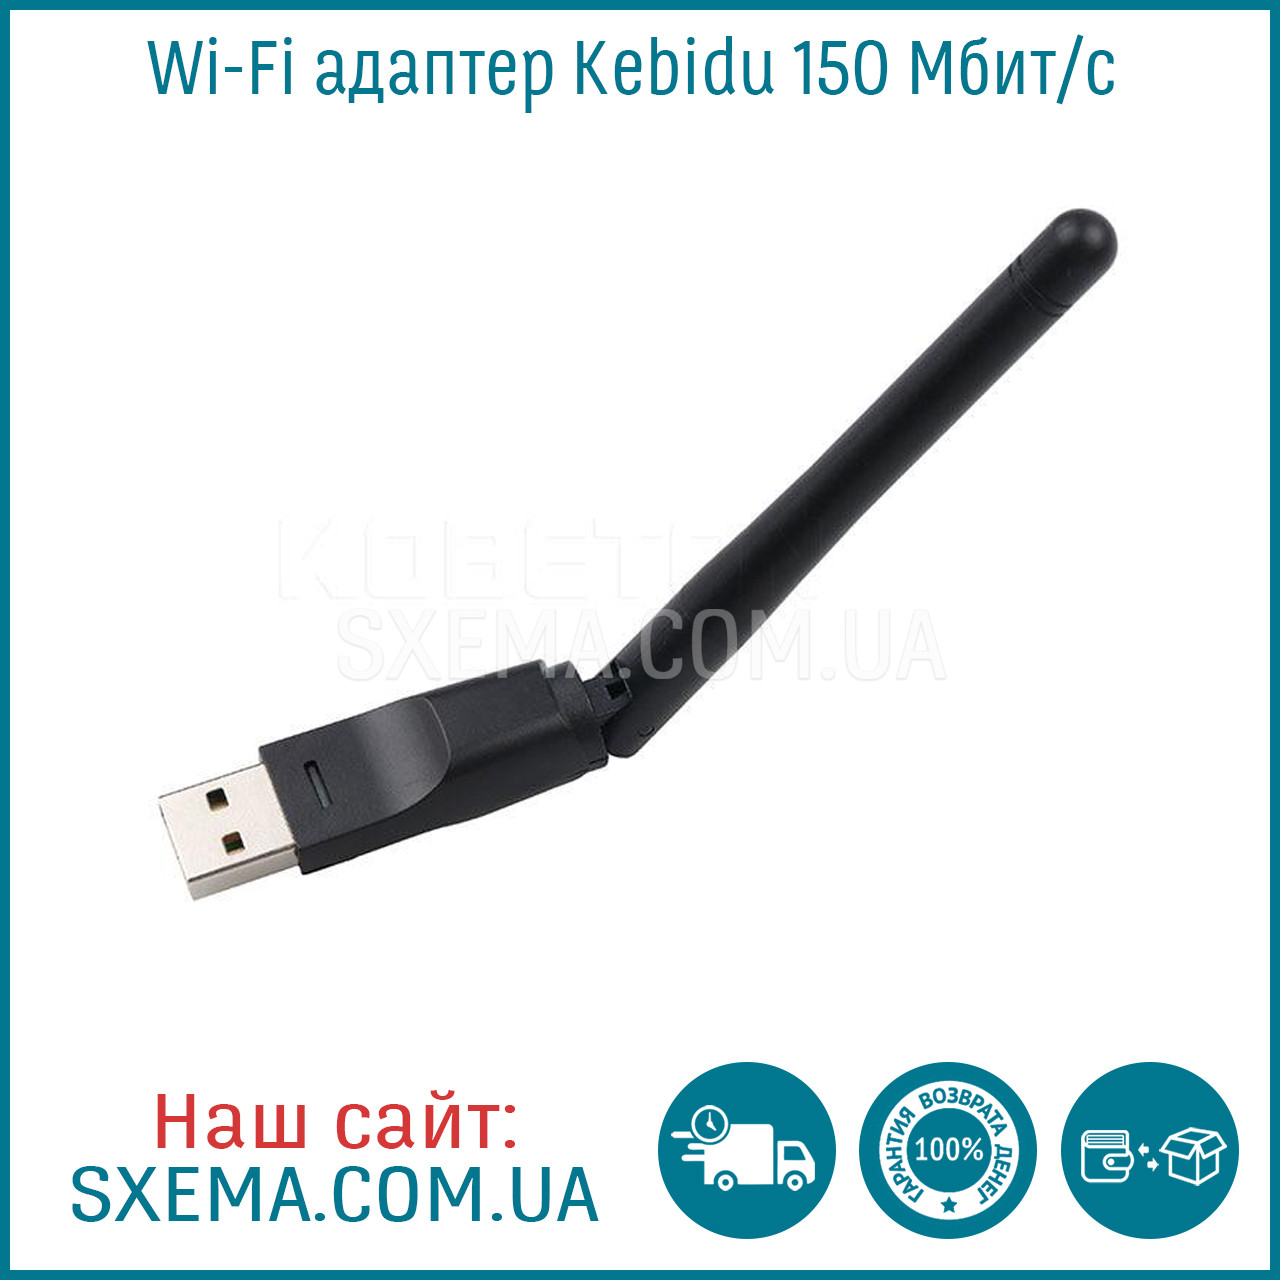 Wi-Fi адаптер Kebidu 150 Мбіт/с USB 2,4 ГГц адаптер з антеною Чипсет Ralink MT-7601 